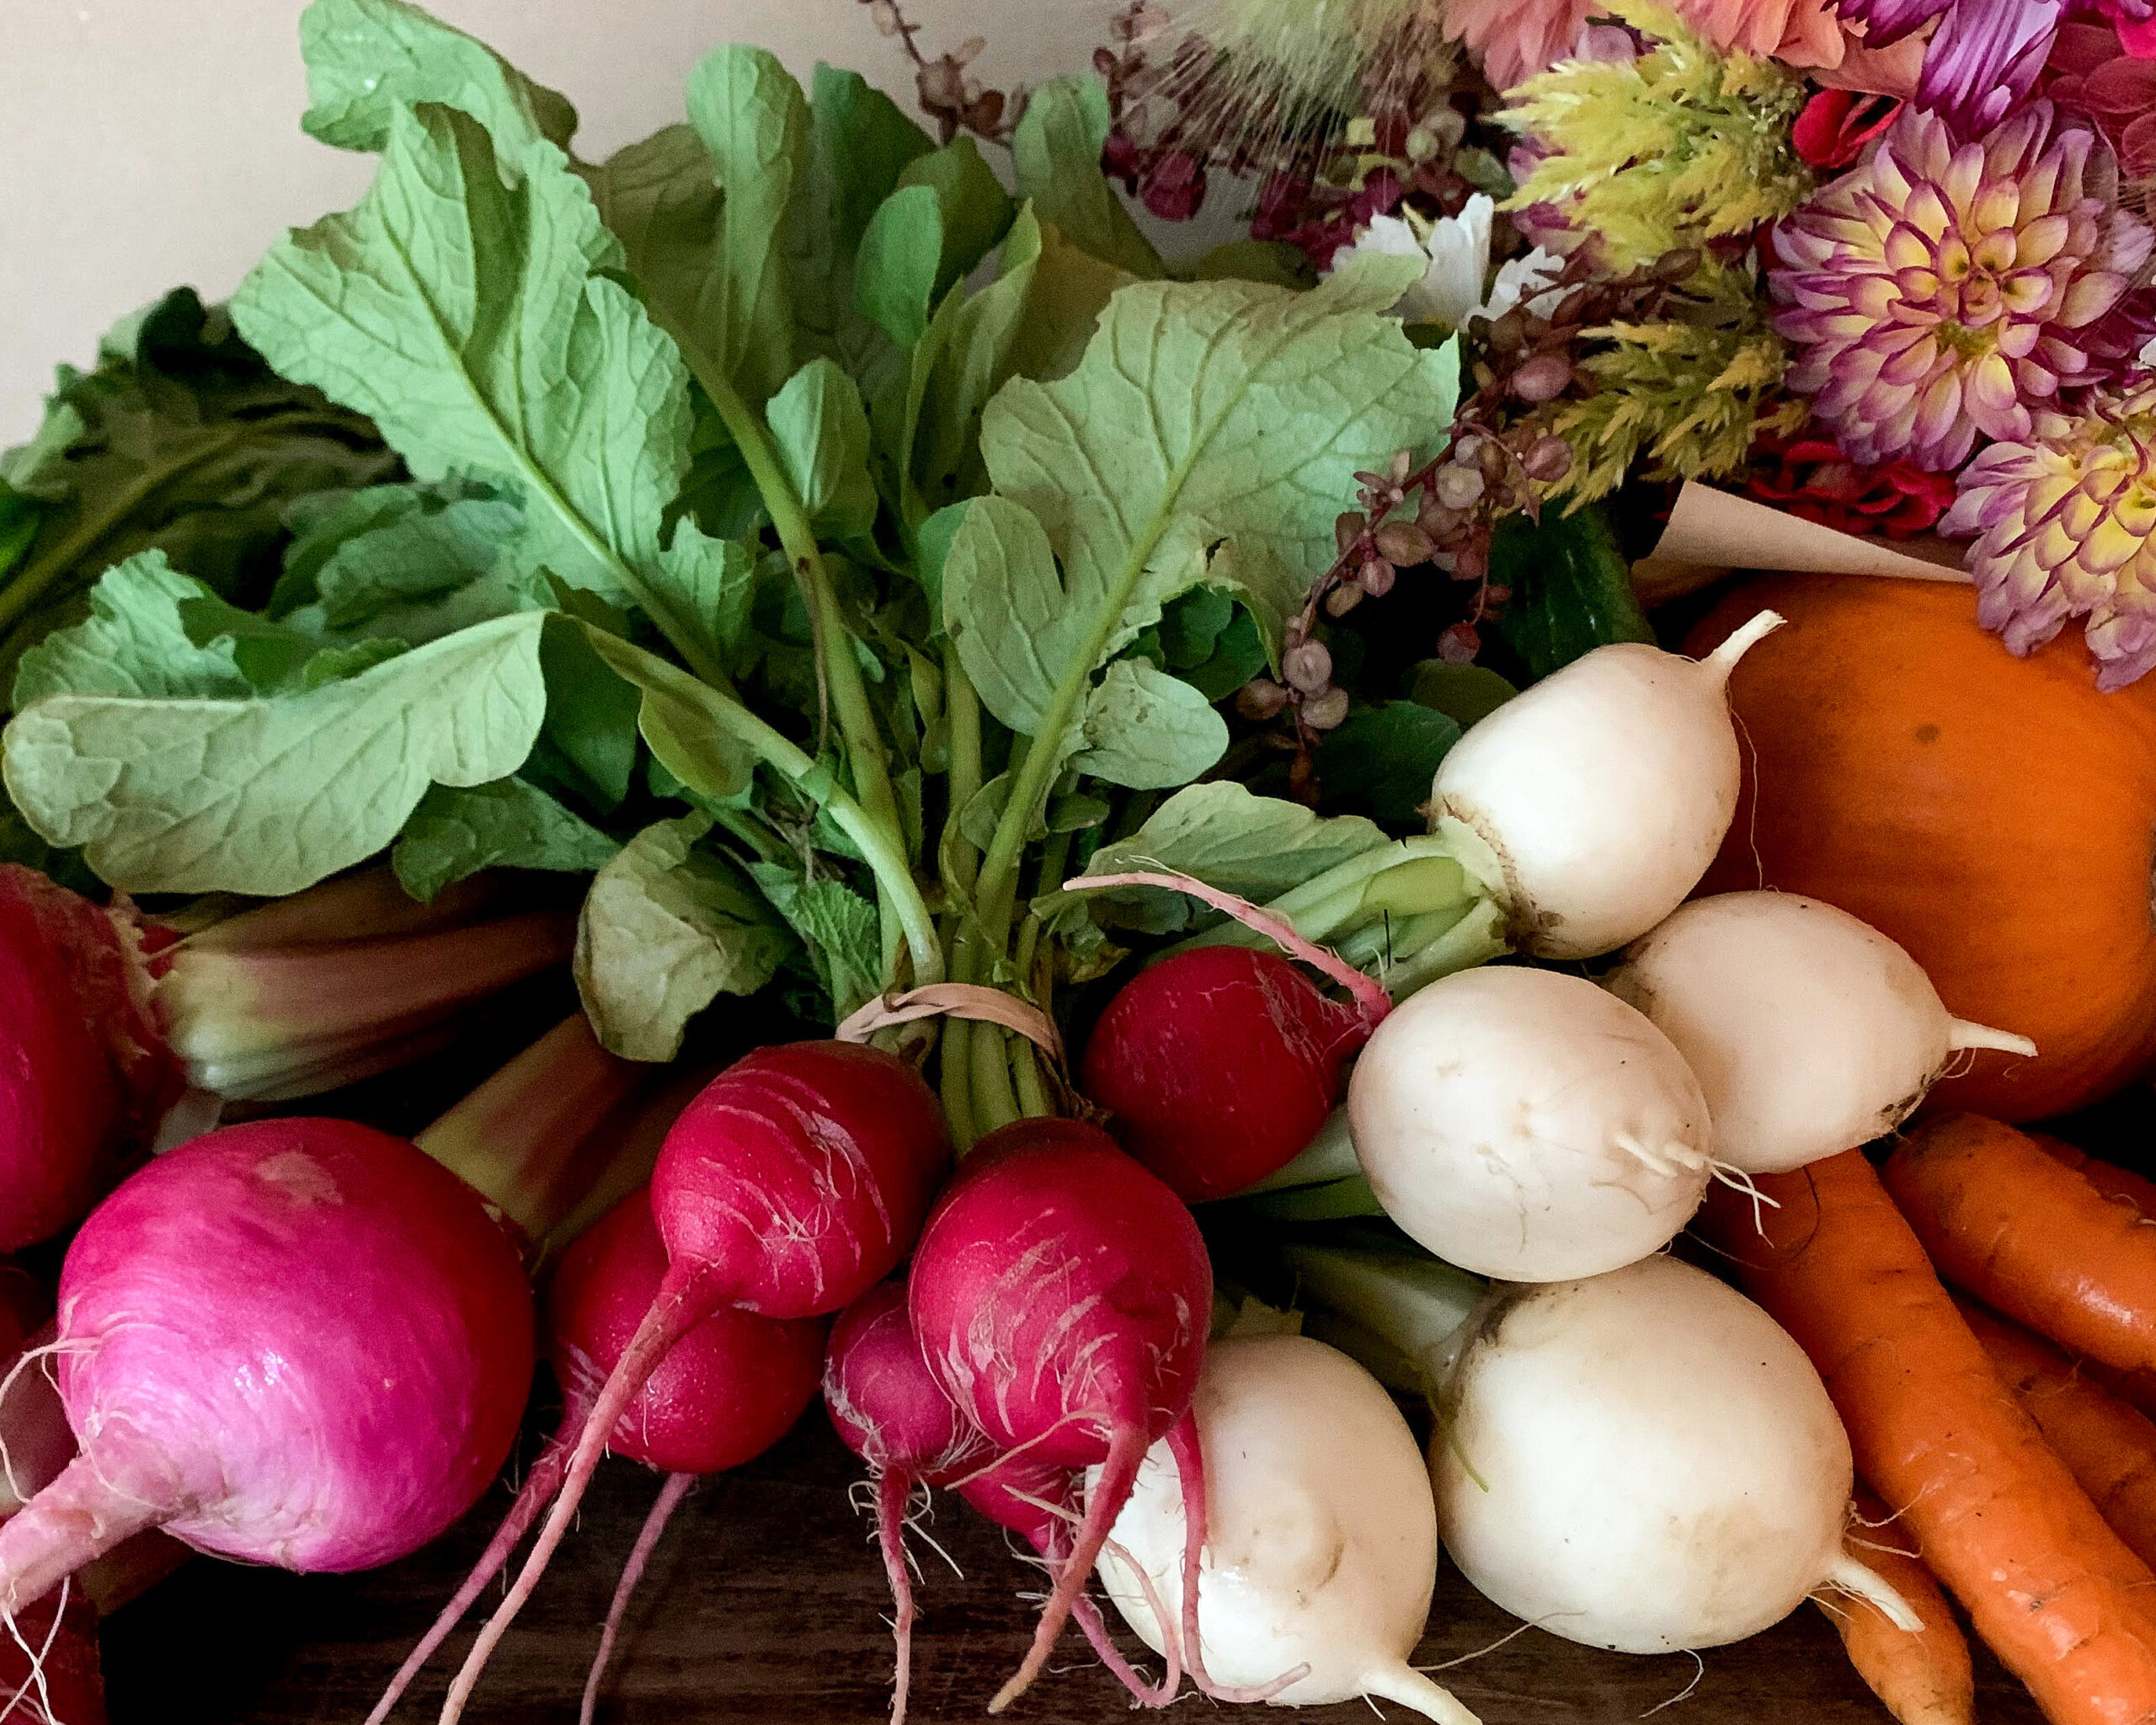 Fresh greens, beets, radishes, turnips, carrots, garlic, pumpkin, and flowers